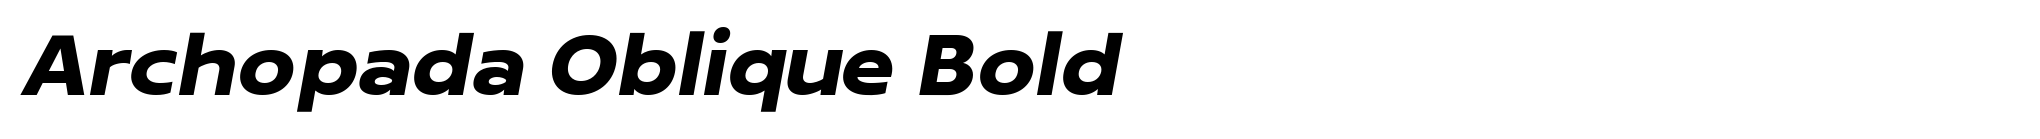 Archopada Oblique Bold image